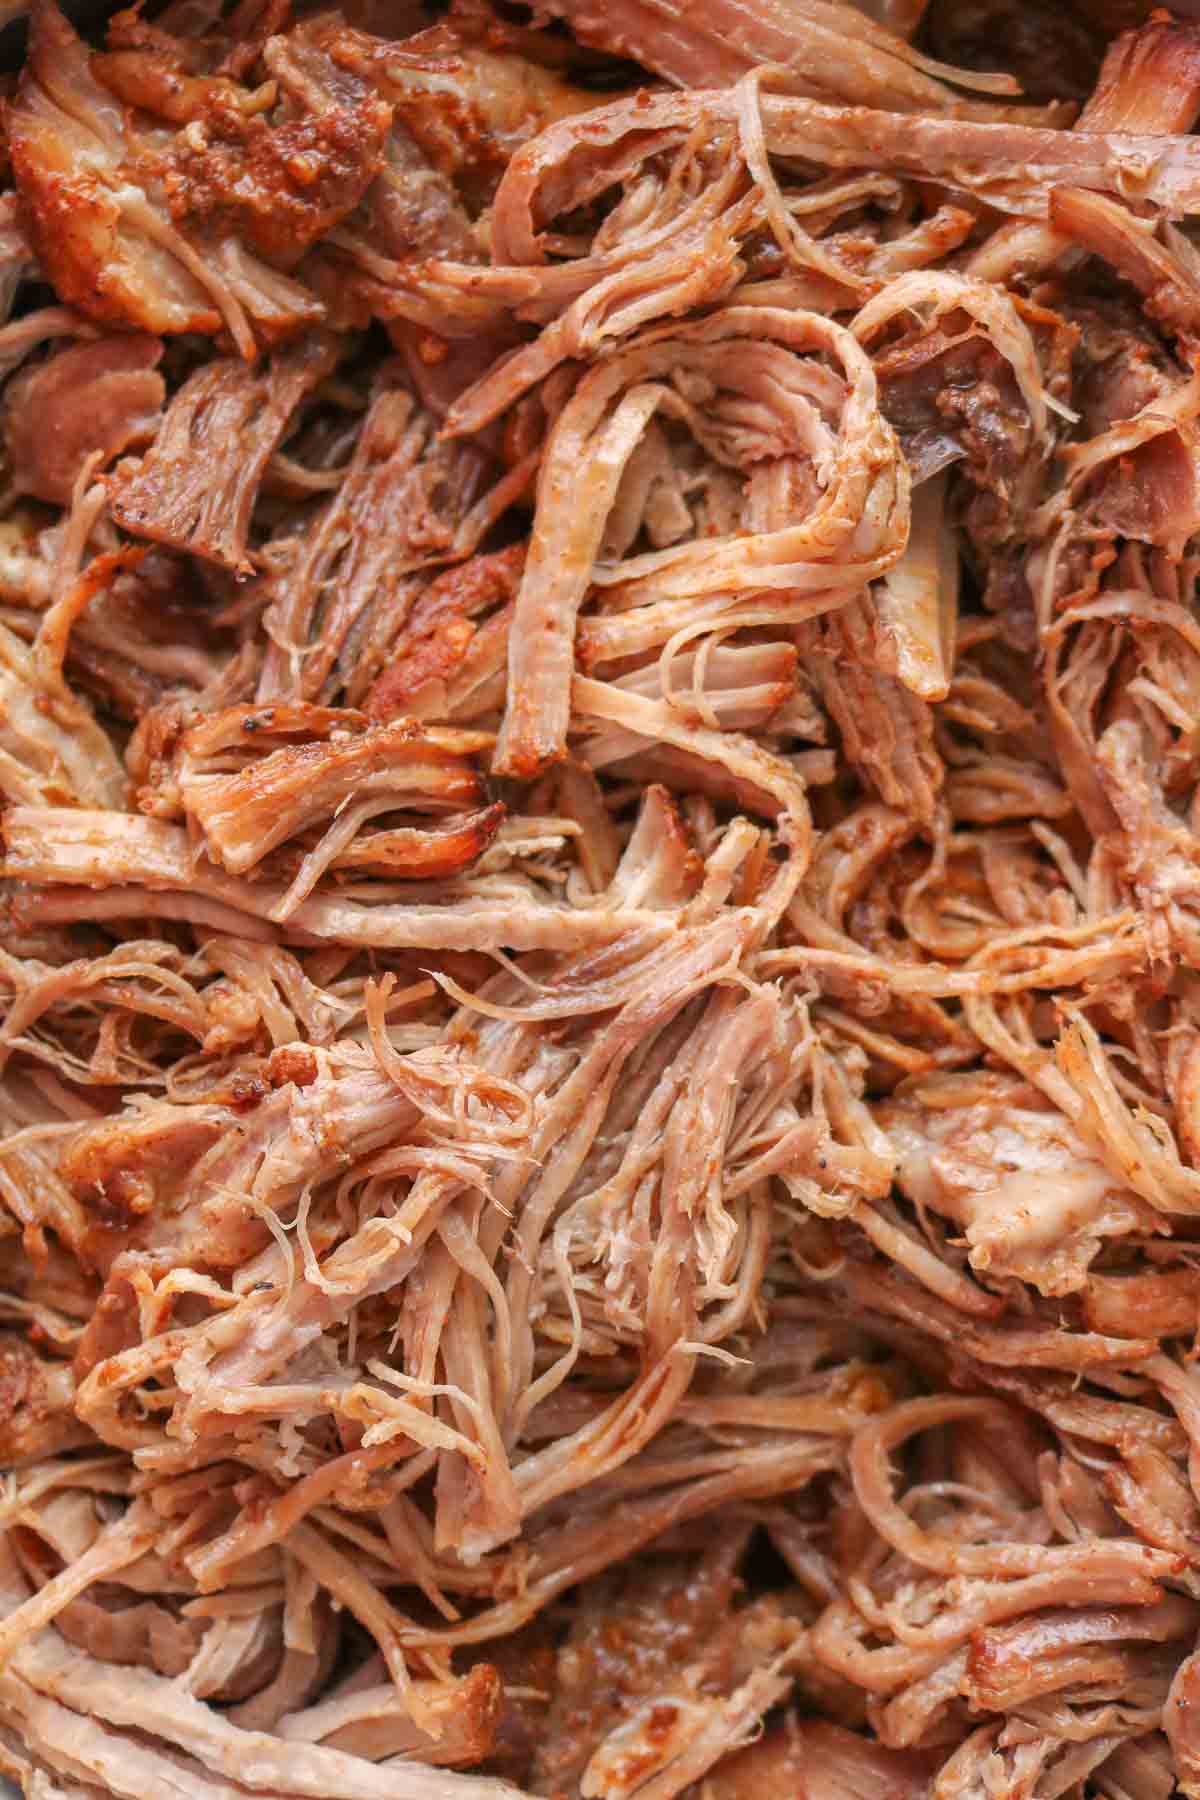 Close-up of shredded pork.